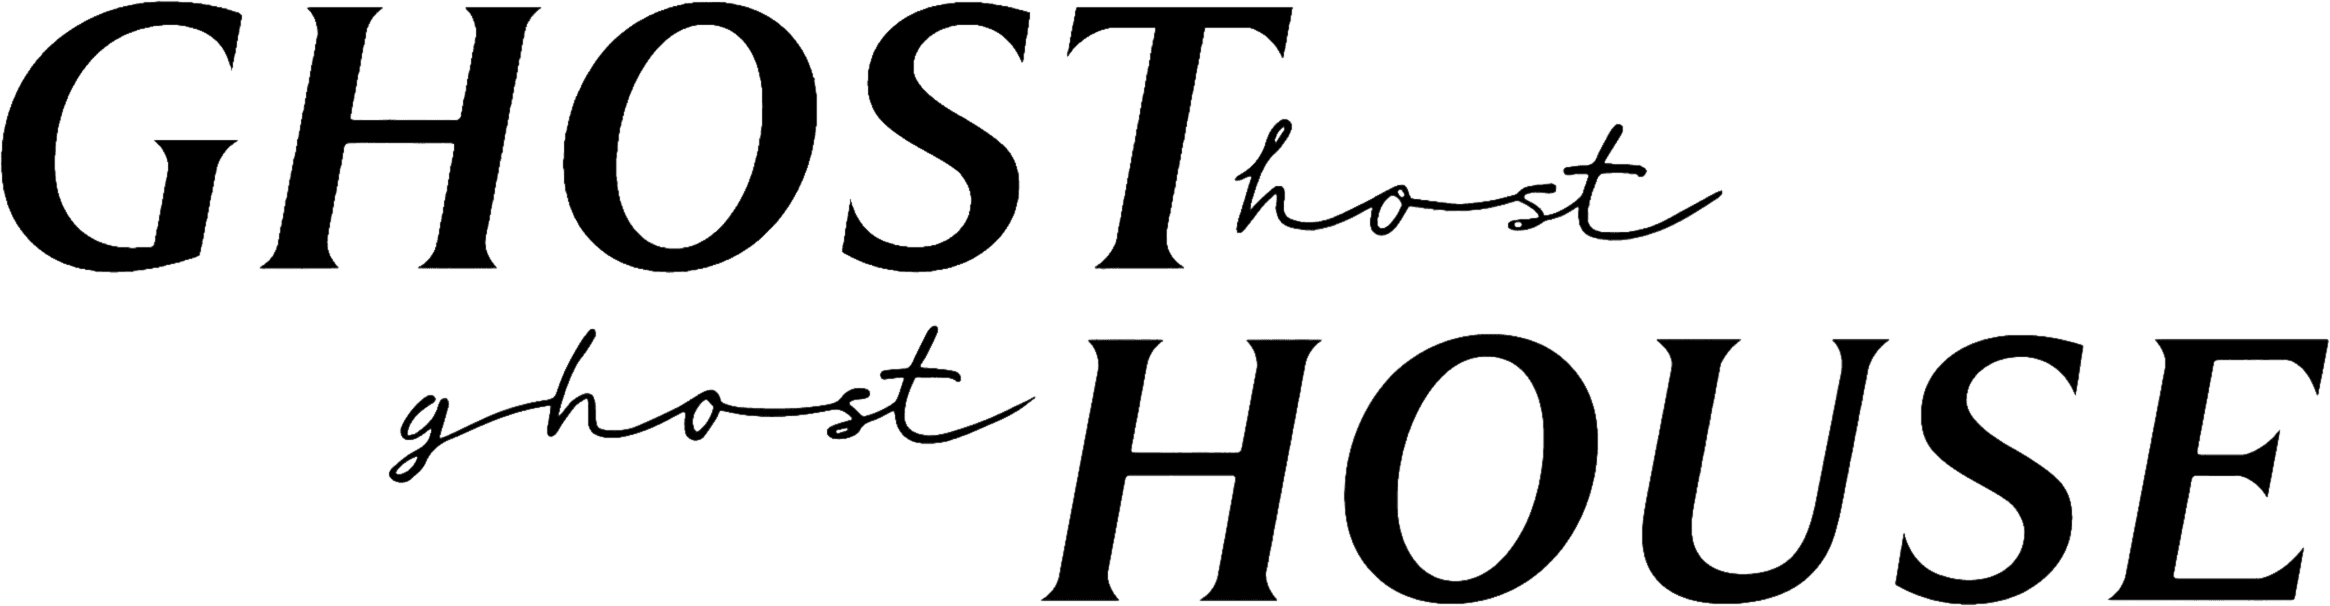 Ghost Host, Ghost House logo